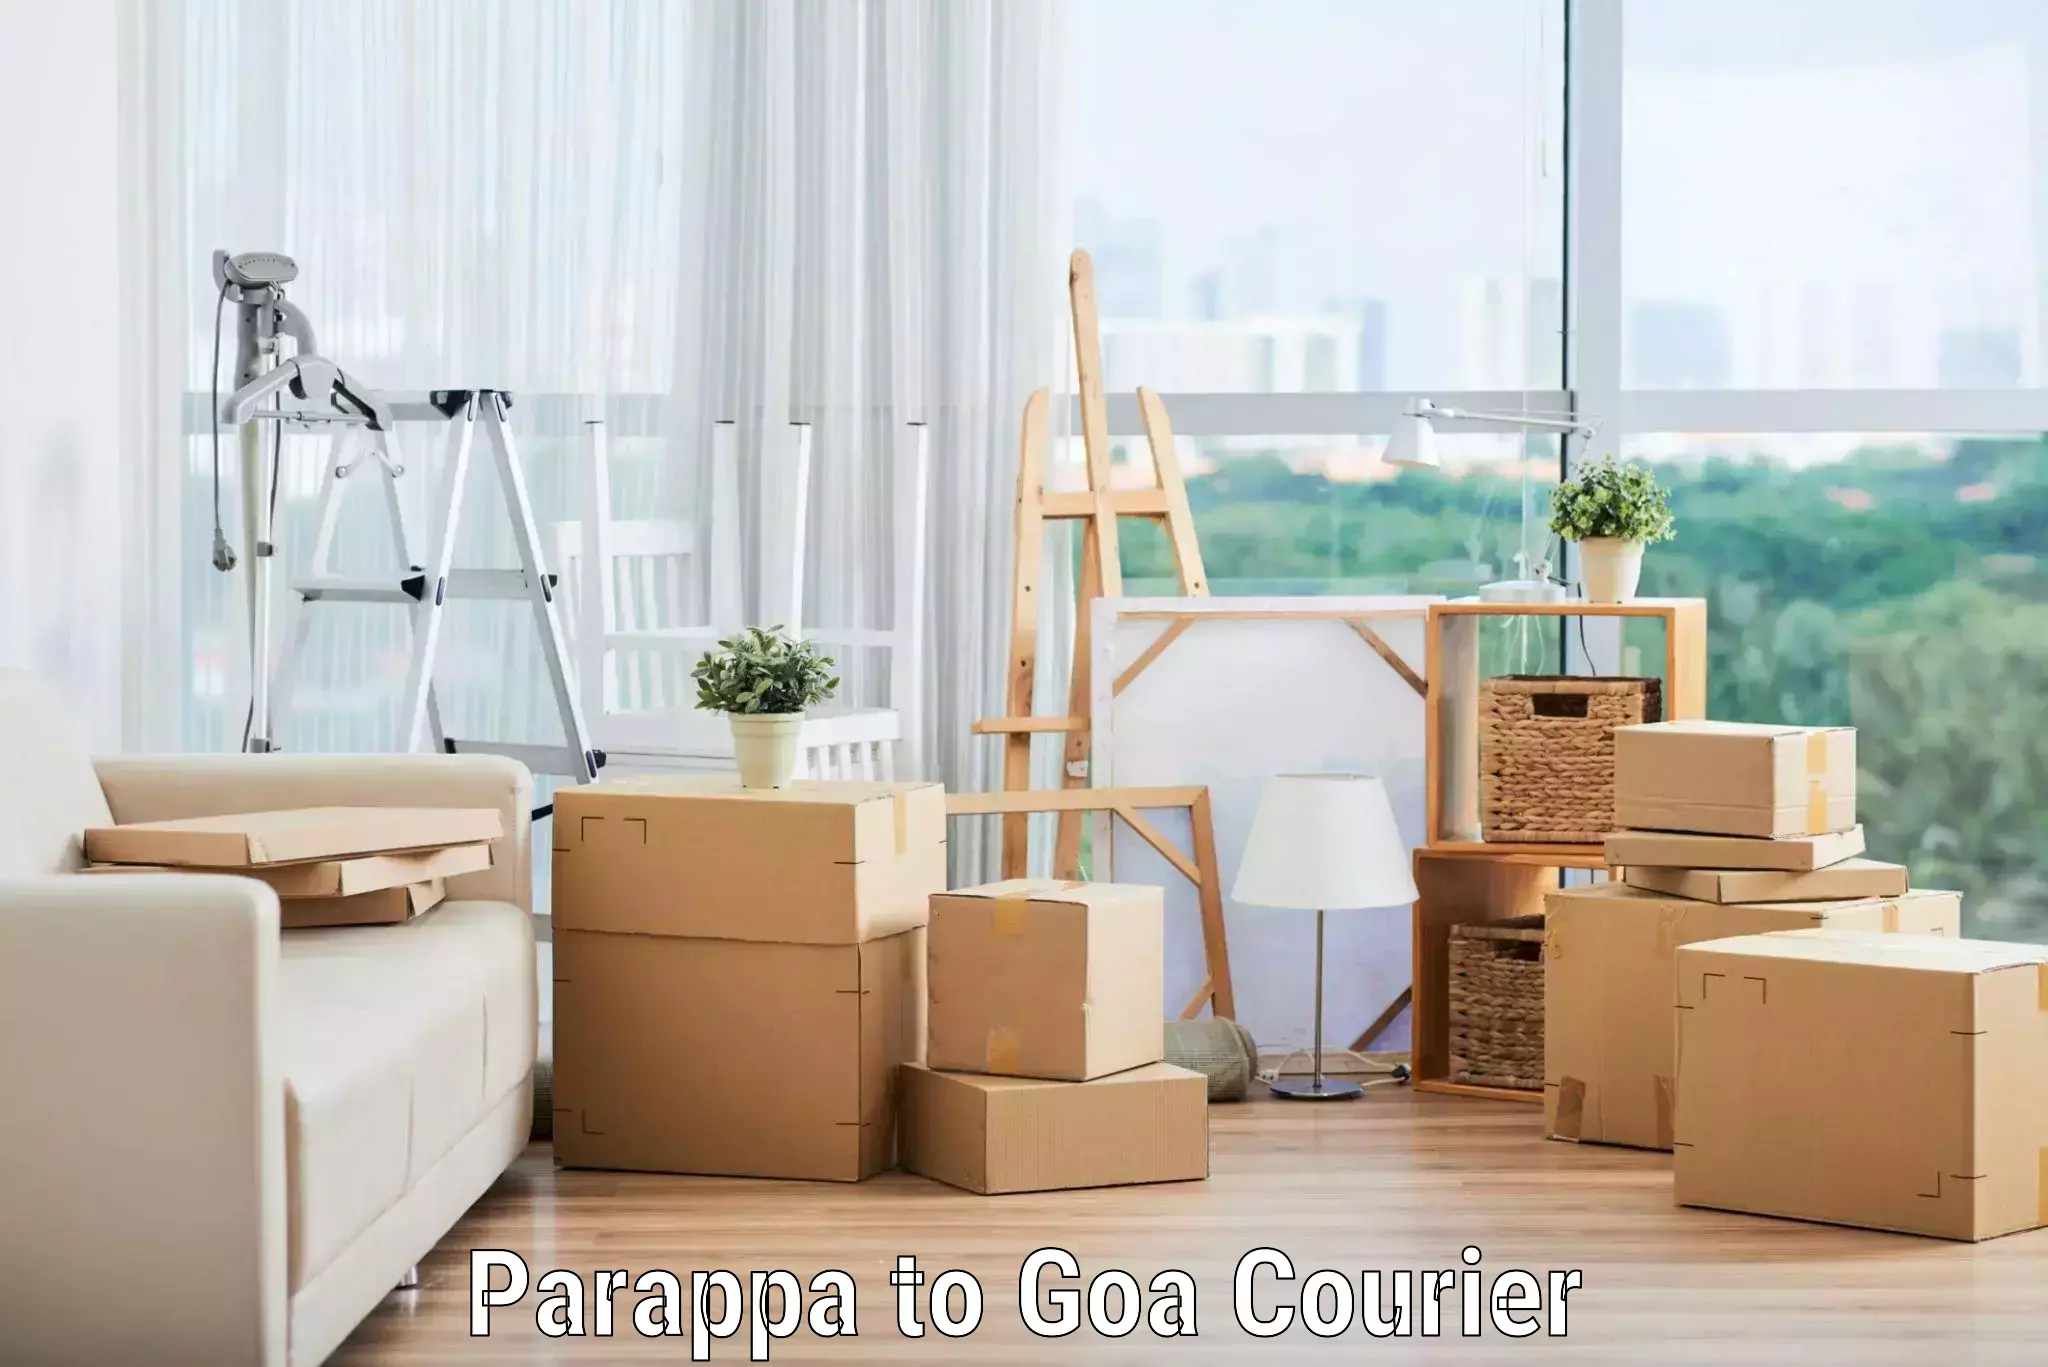 Professional moving company Parappa to Goa